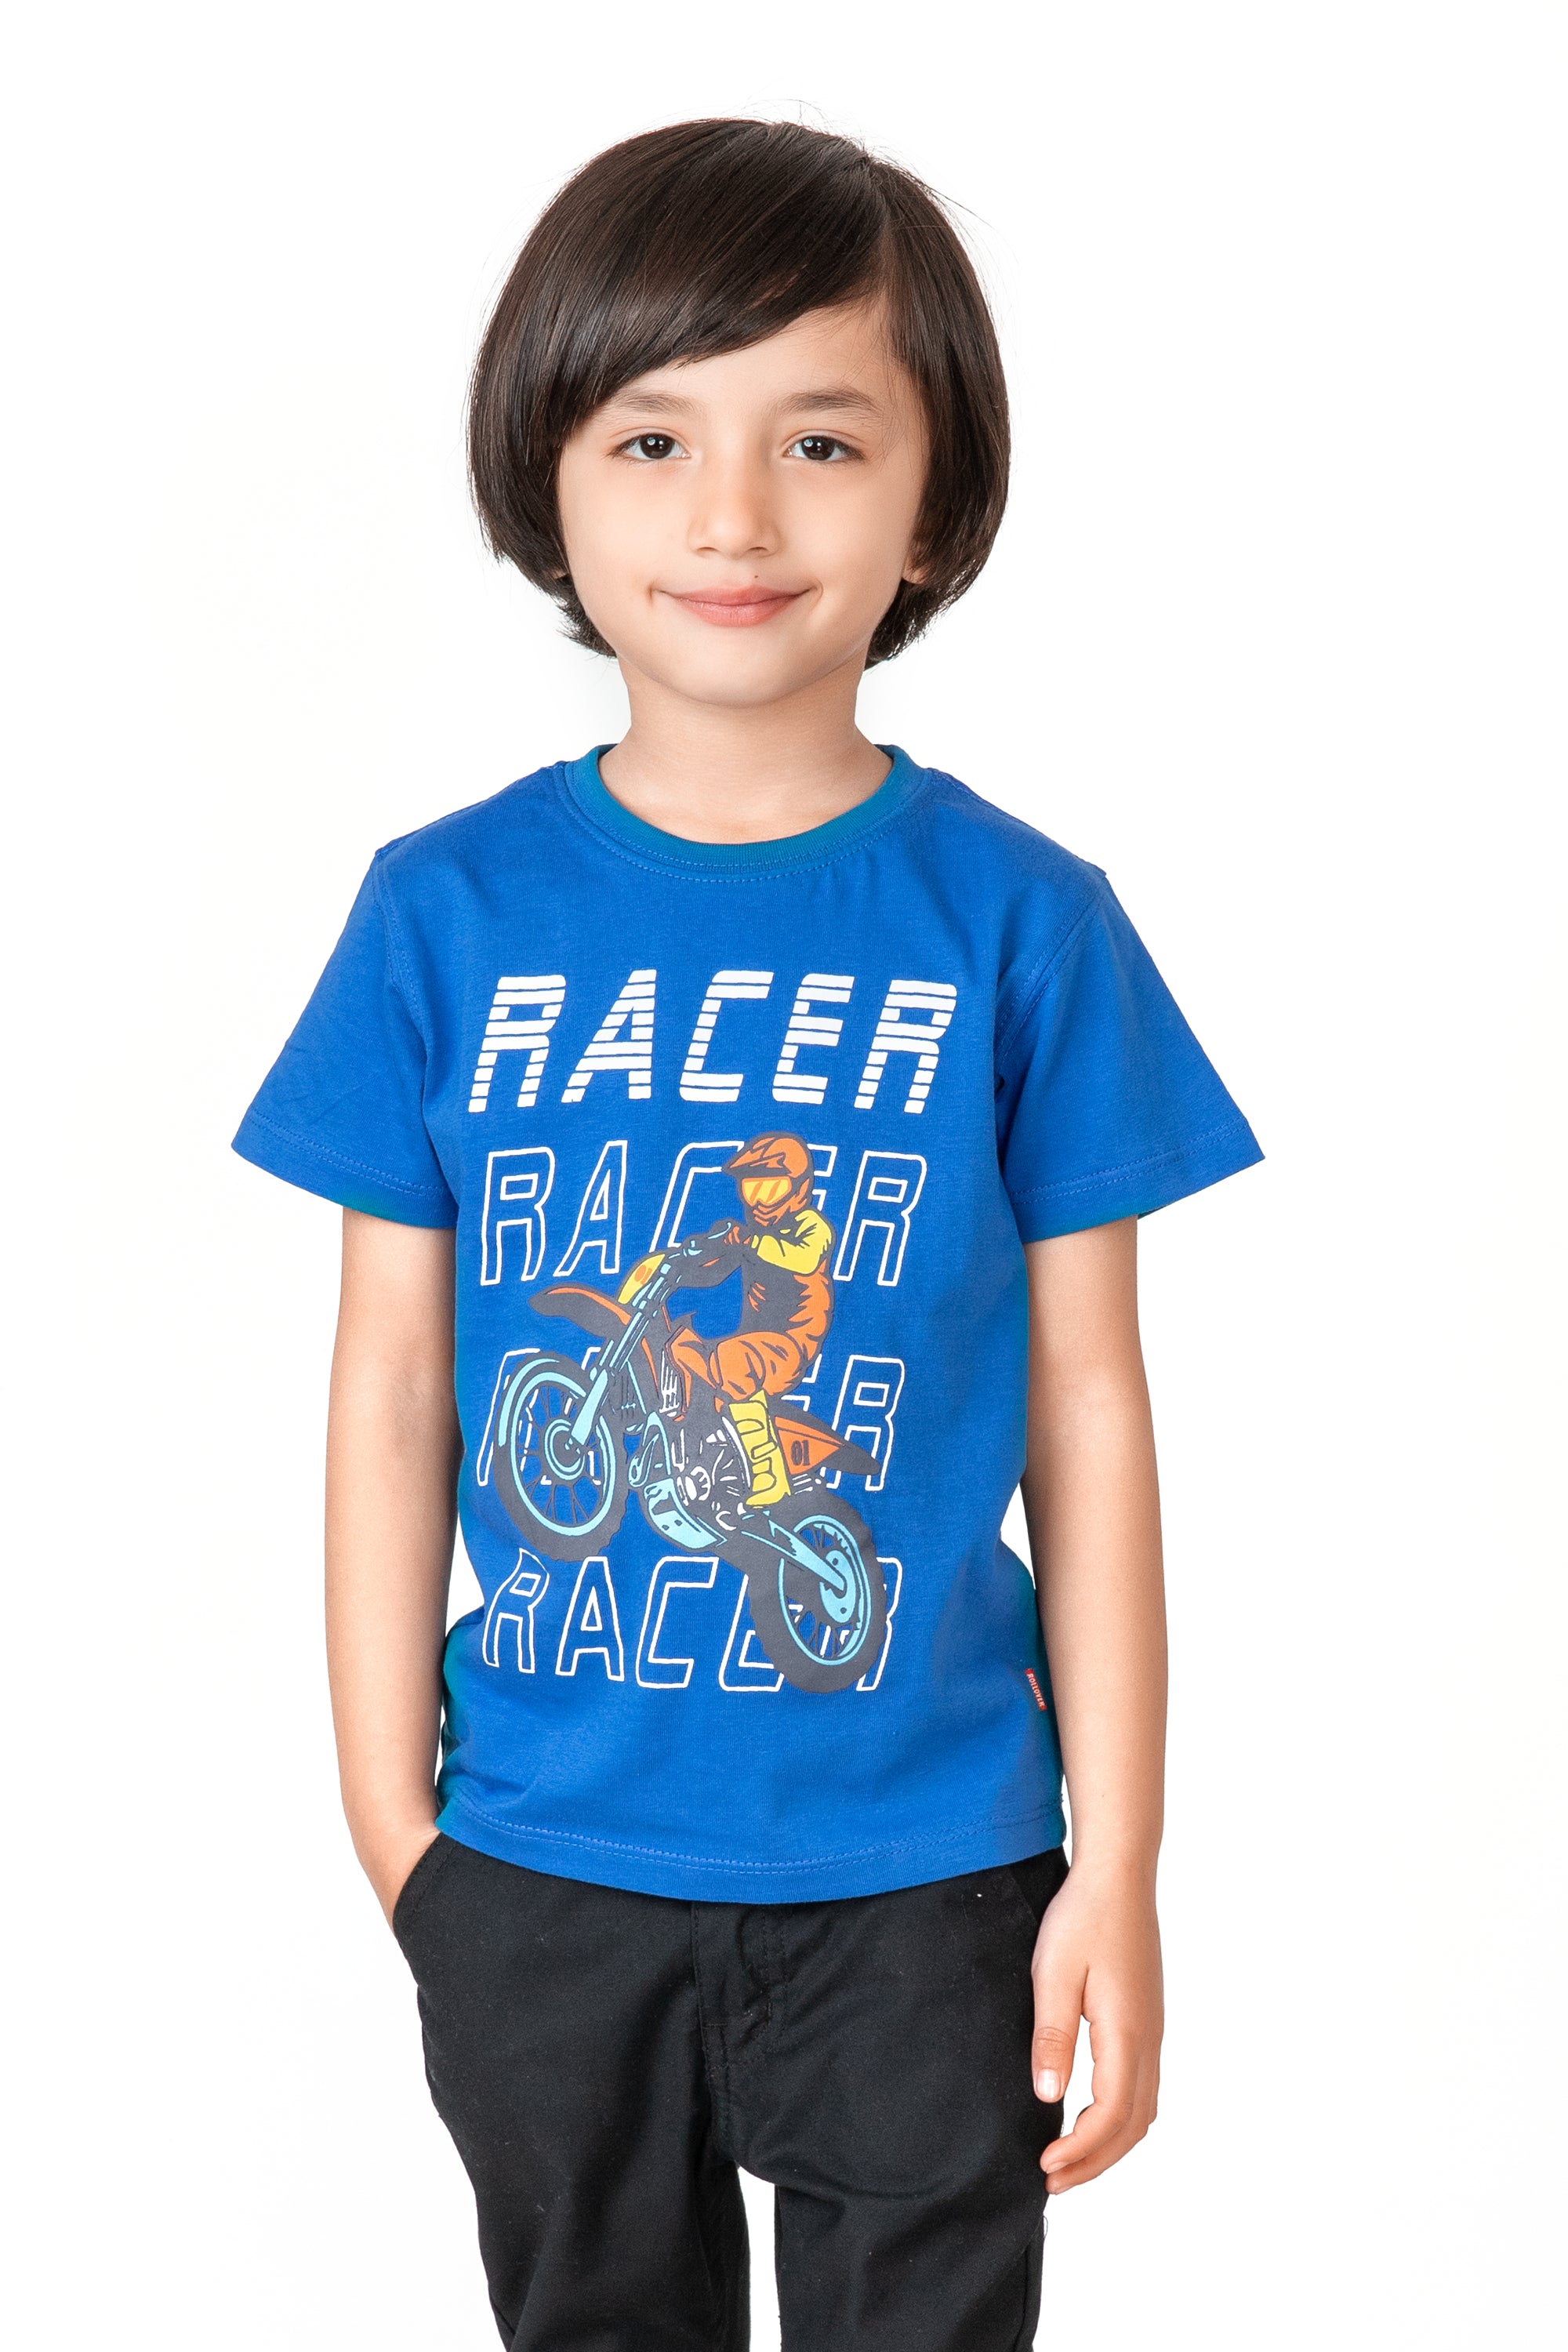 Blue Boys Racer Graphic Tee Shirt